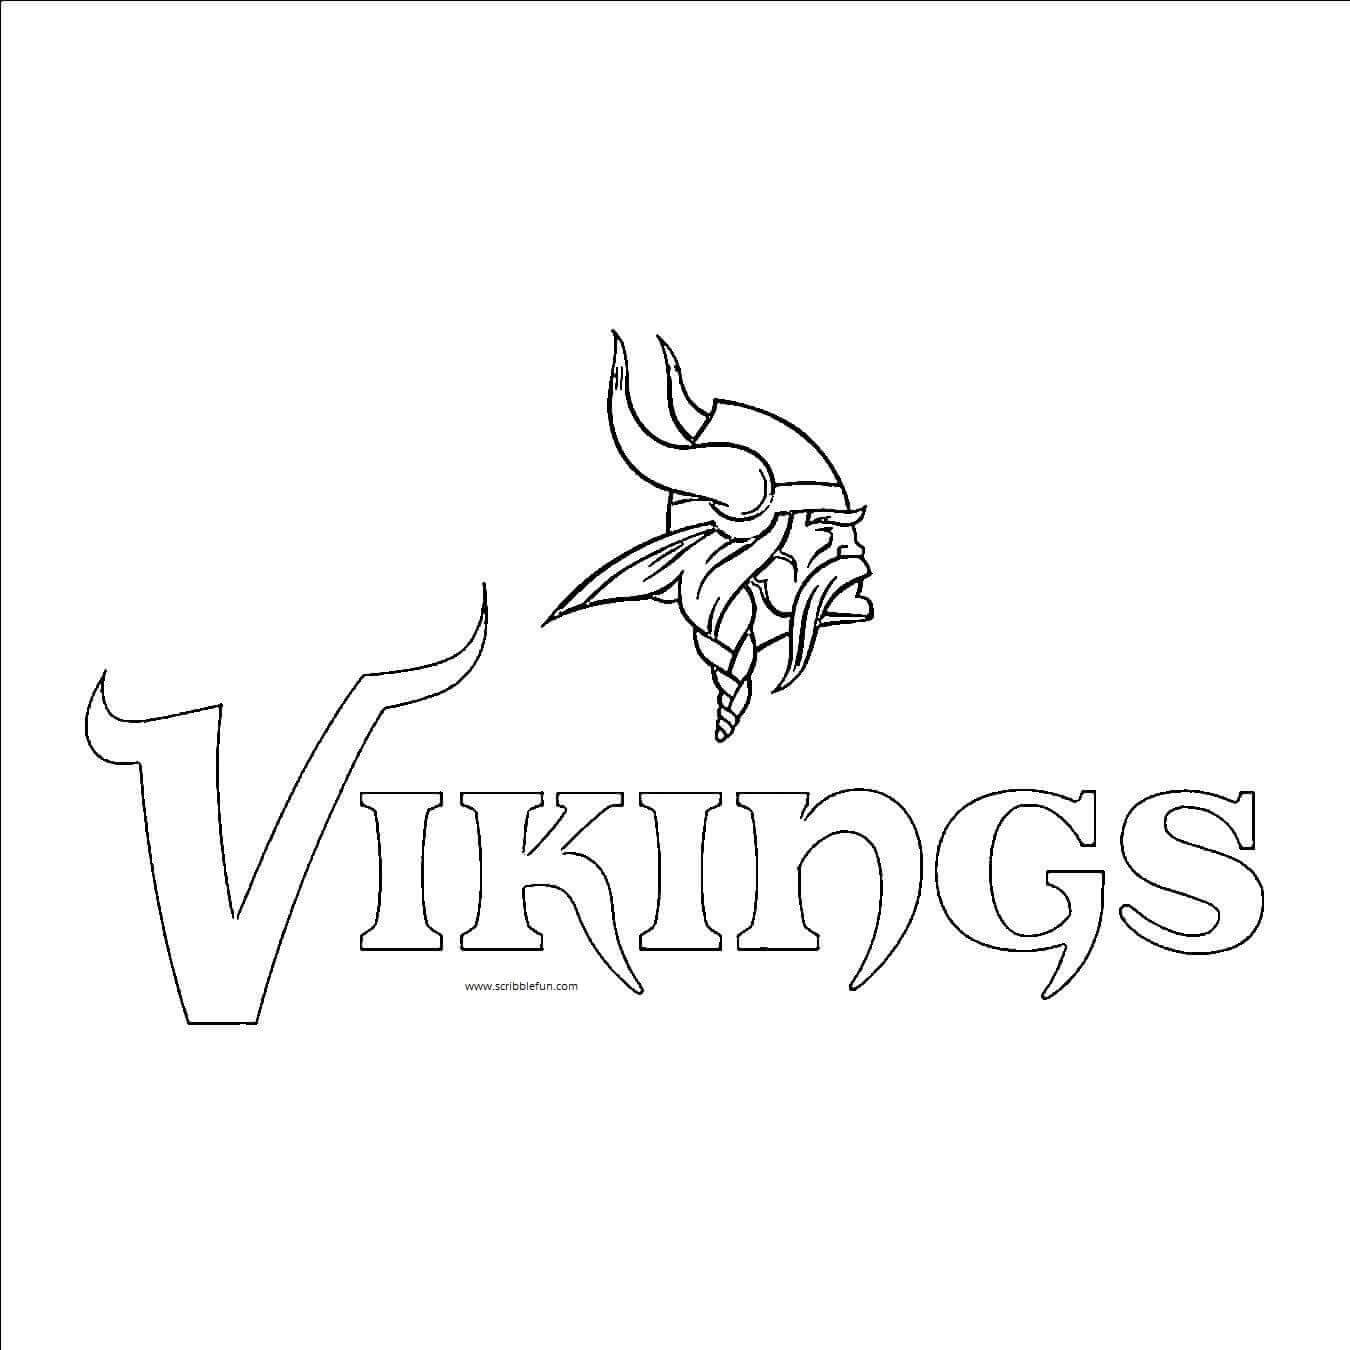 Minnesota Vikings Coloring Page